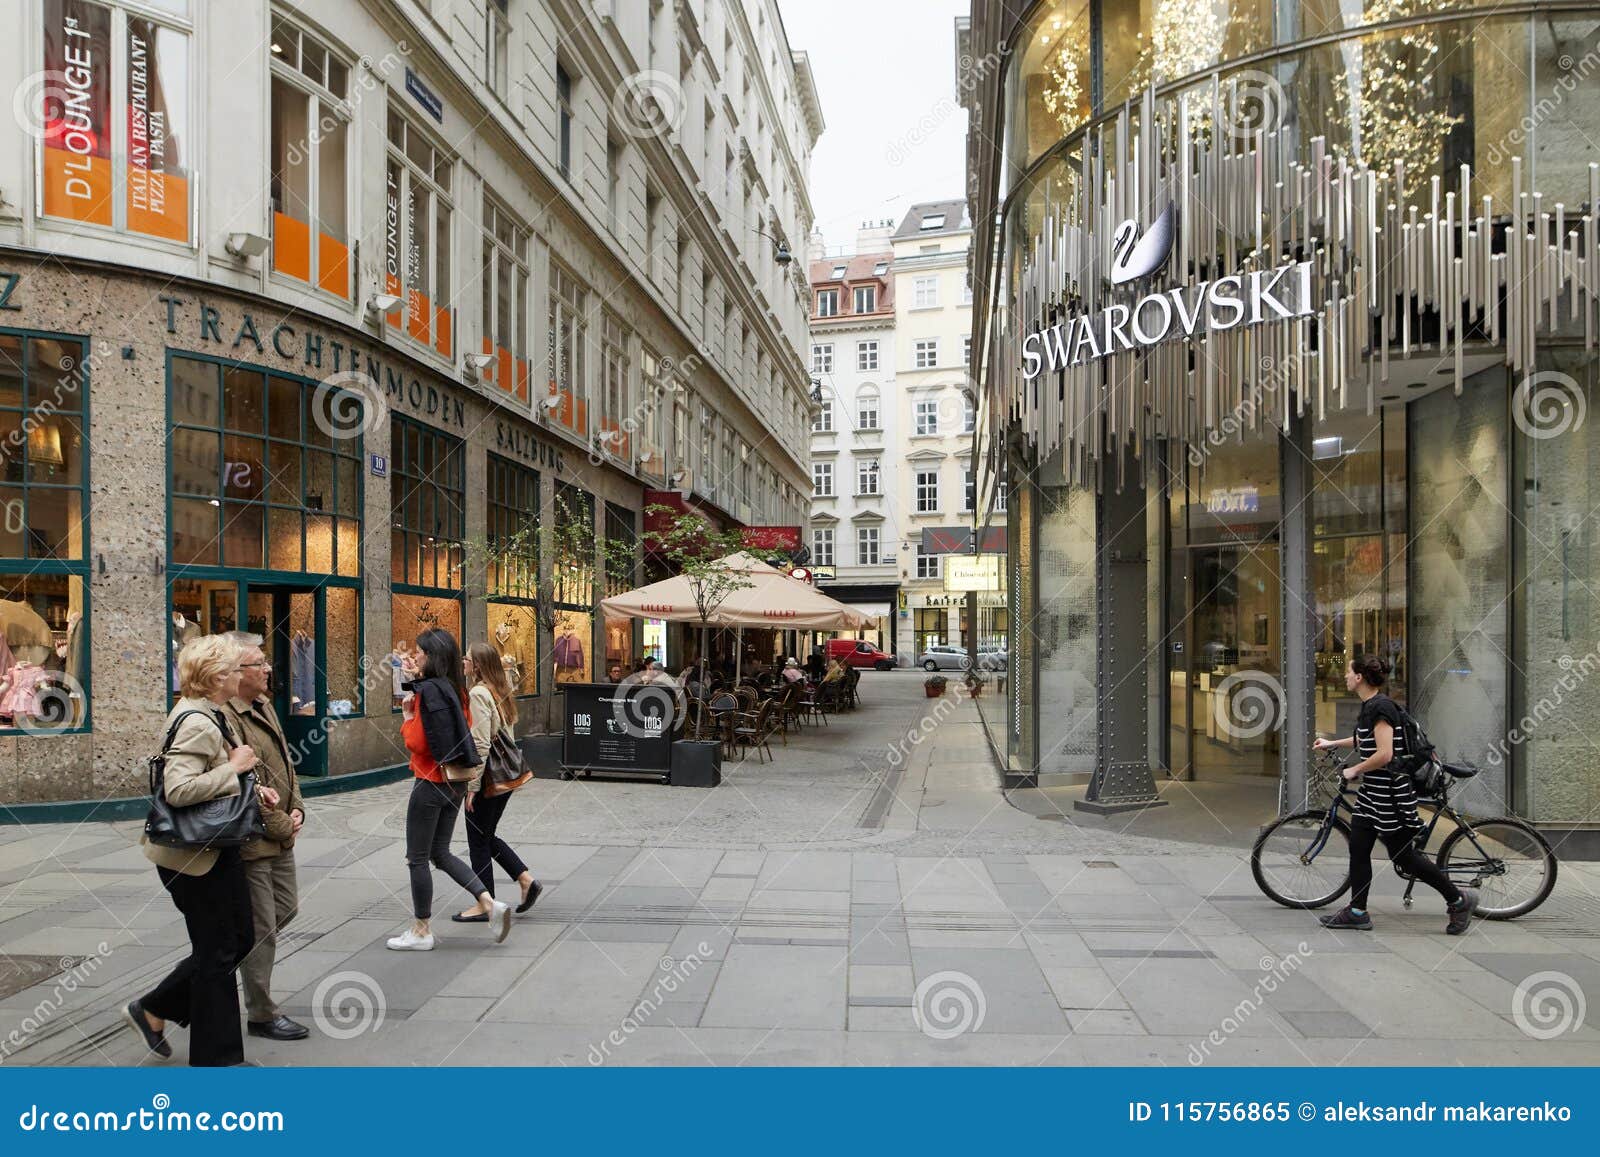 Vienna, Austria - 15 April 2018: the Facade of the Swarovski Jewelry Store.  Editorial Image - Image of exterior, illustrativeeditorial: 115756865